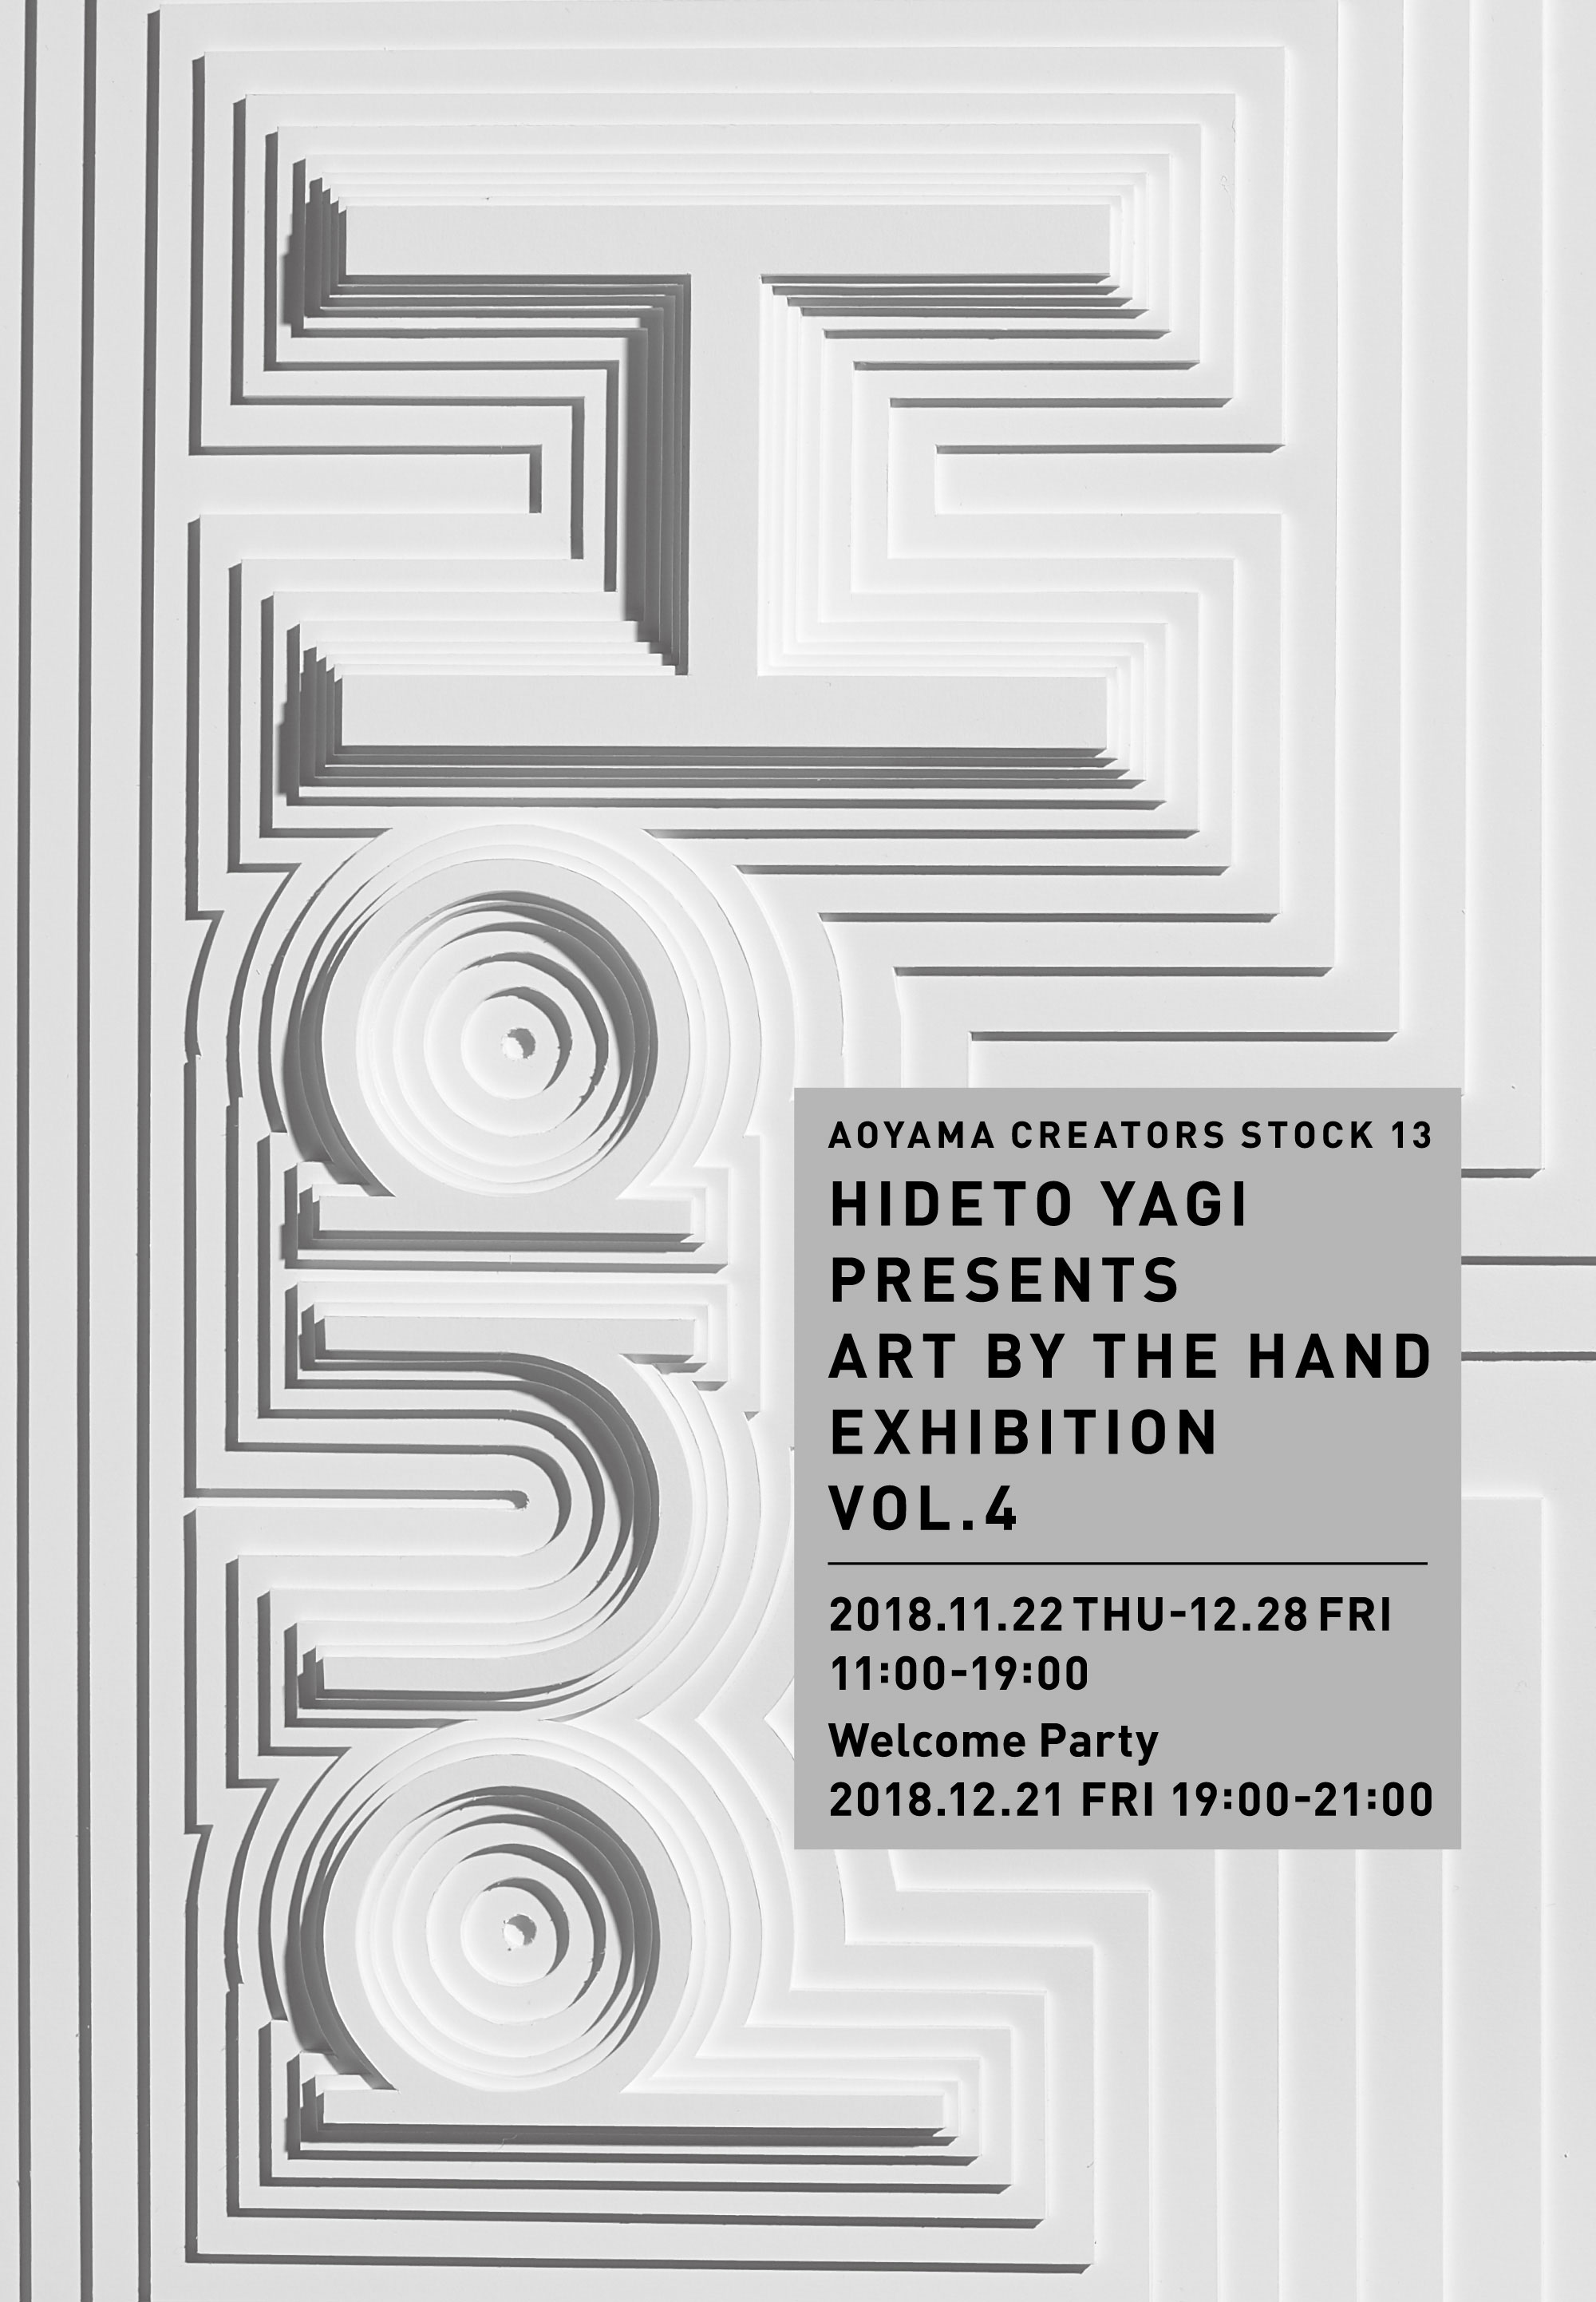 HIDETO YAGI PRESENTS ART BY THE HAND EXHIBITION VOL.